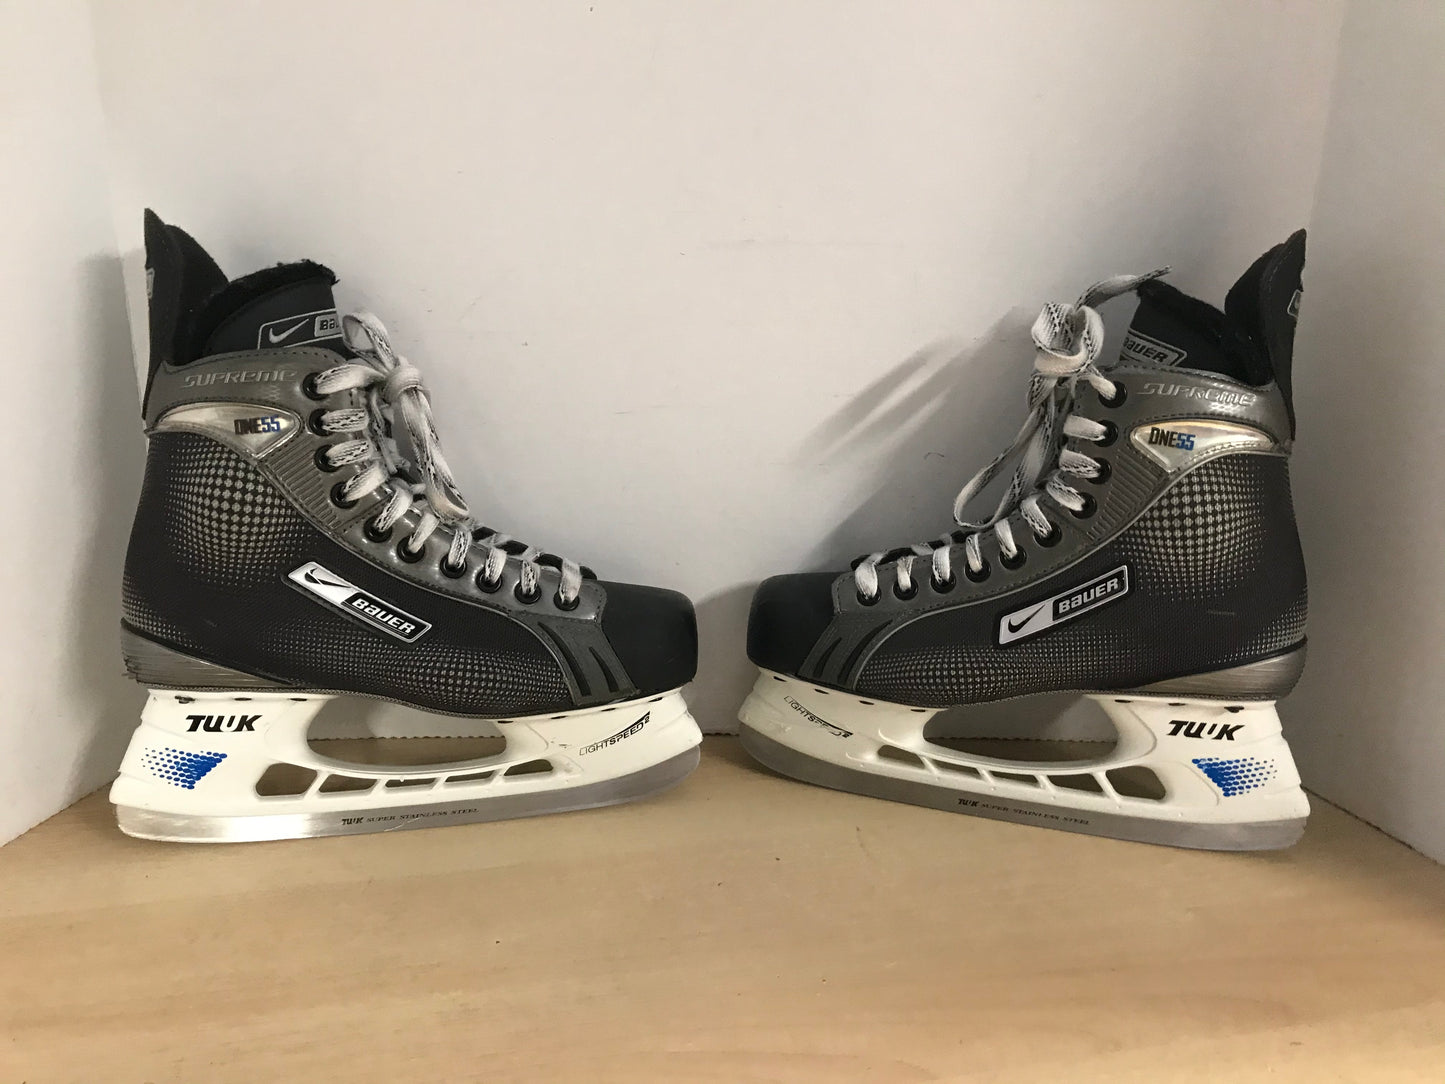 Hockey Skates Men's Size 9 Shoe Size Bauer Supreme One Excellent